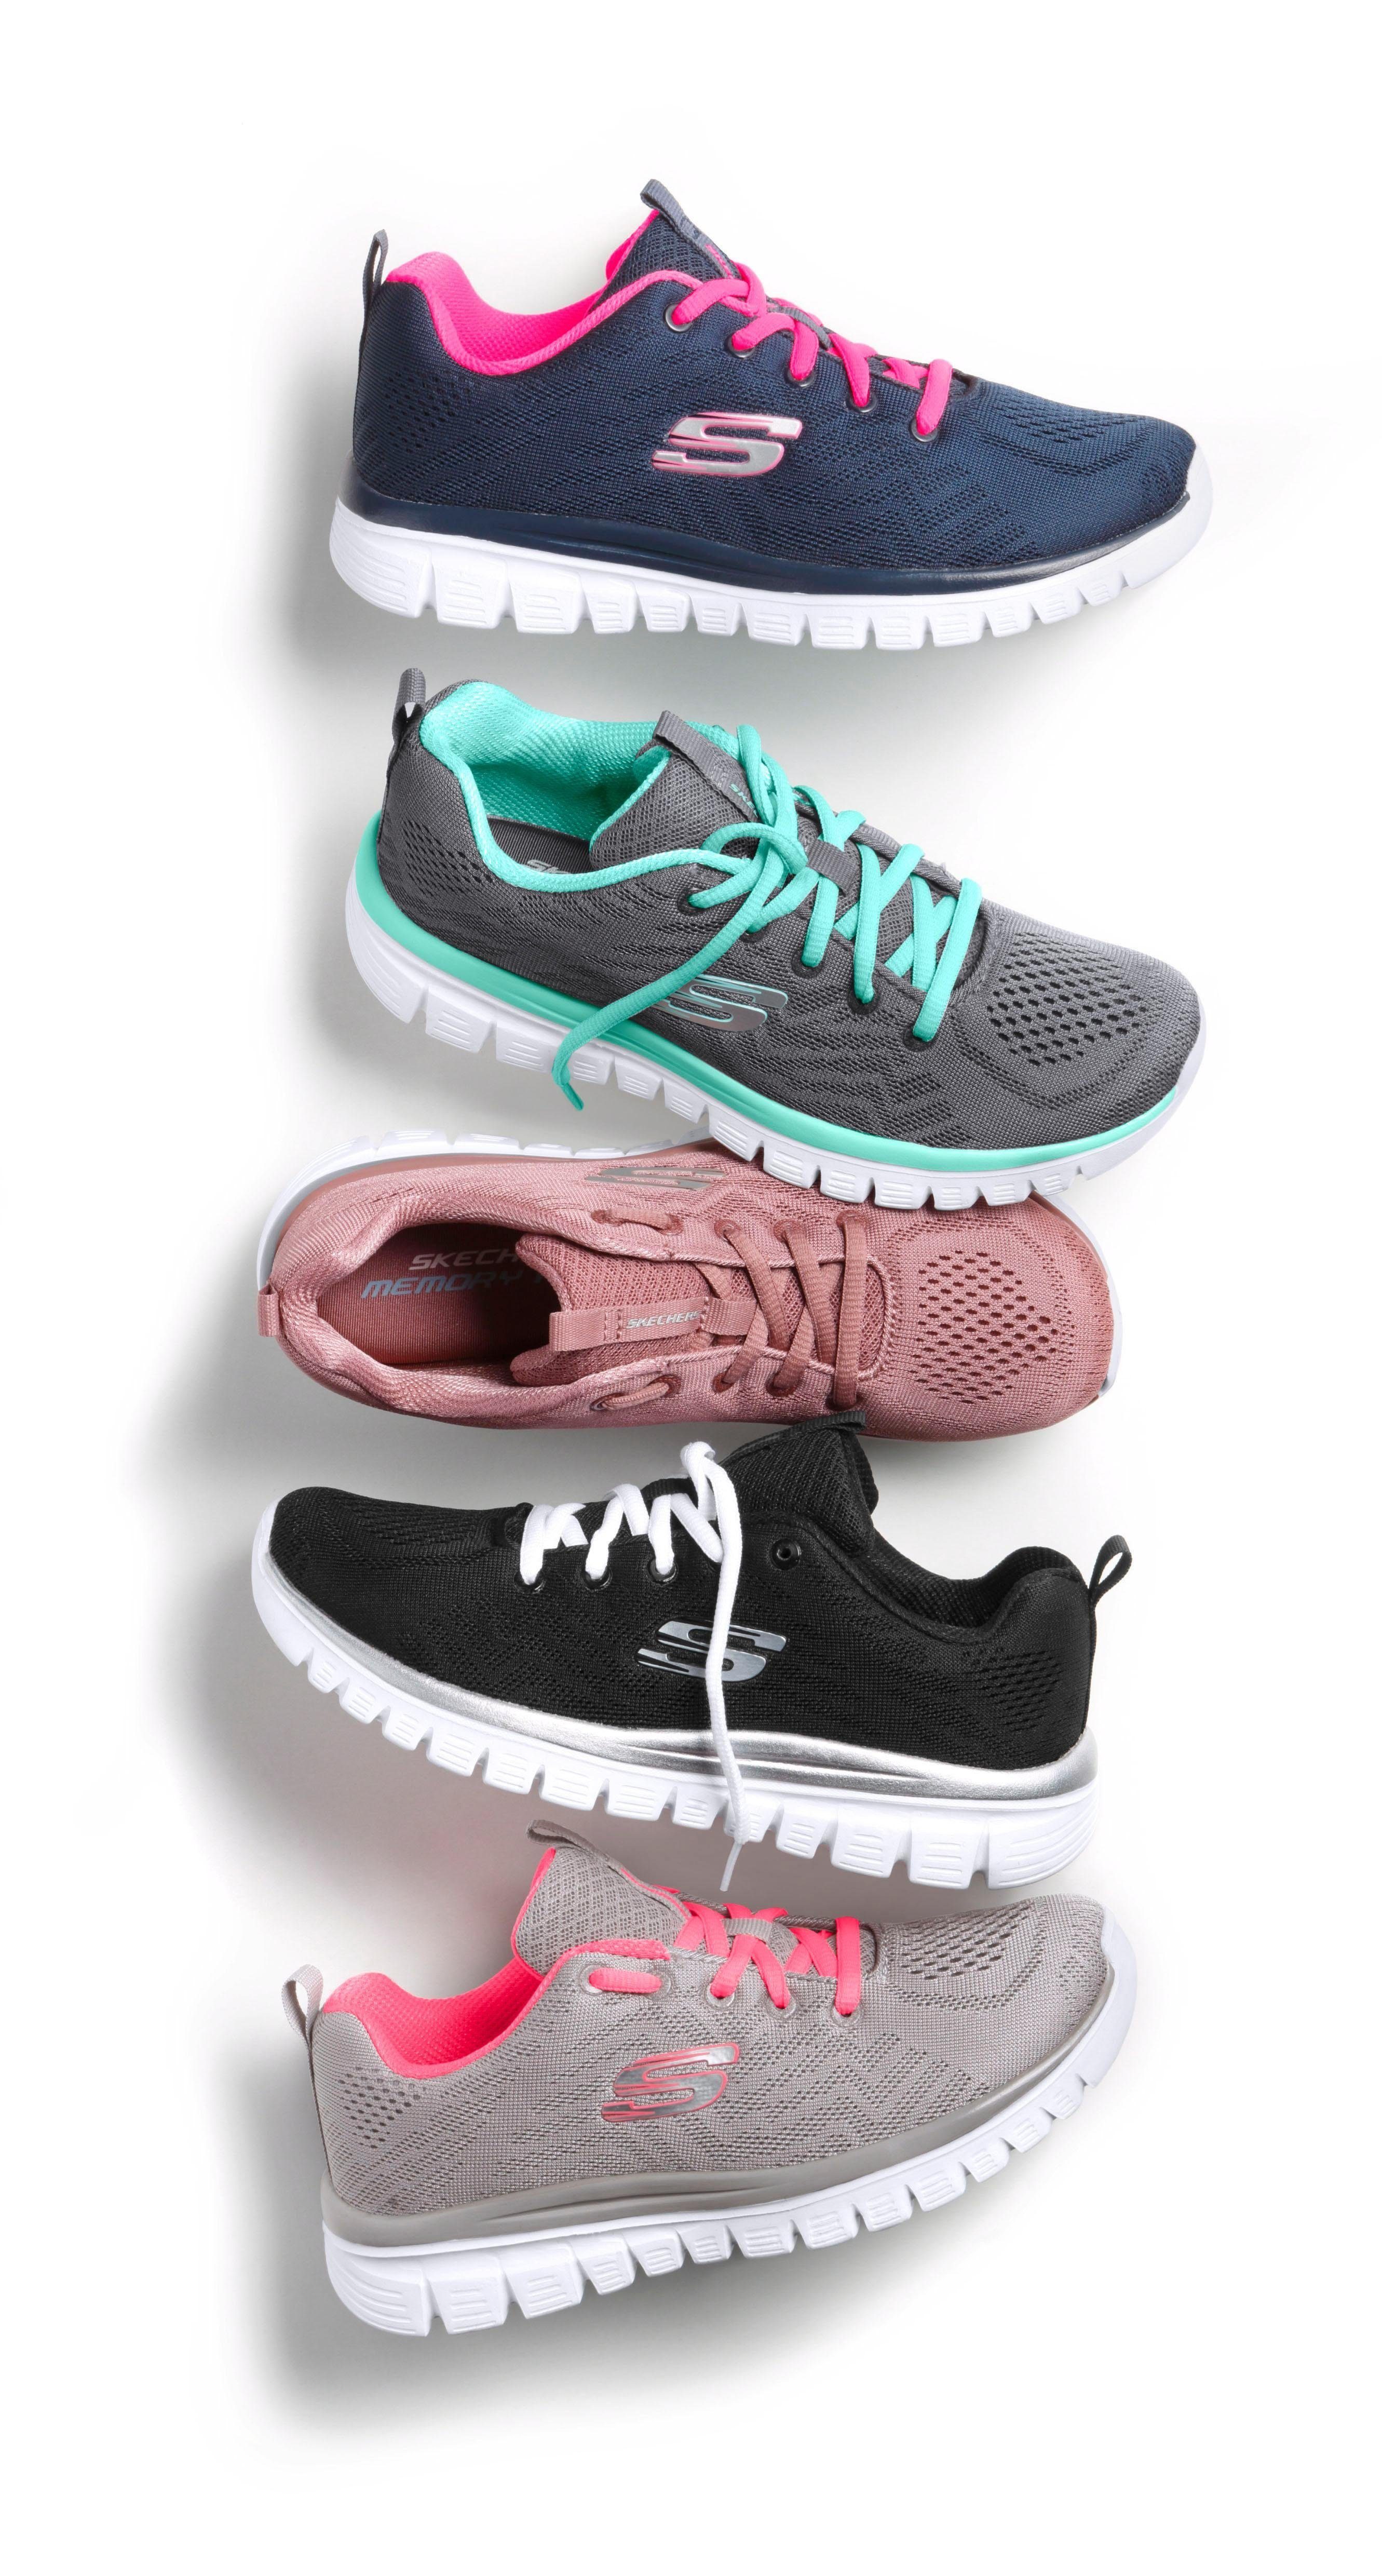 Sneaker Get navy-pink Connected Skechers Dämpfung durch Foam Graceful Memory mit -